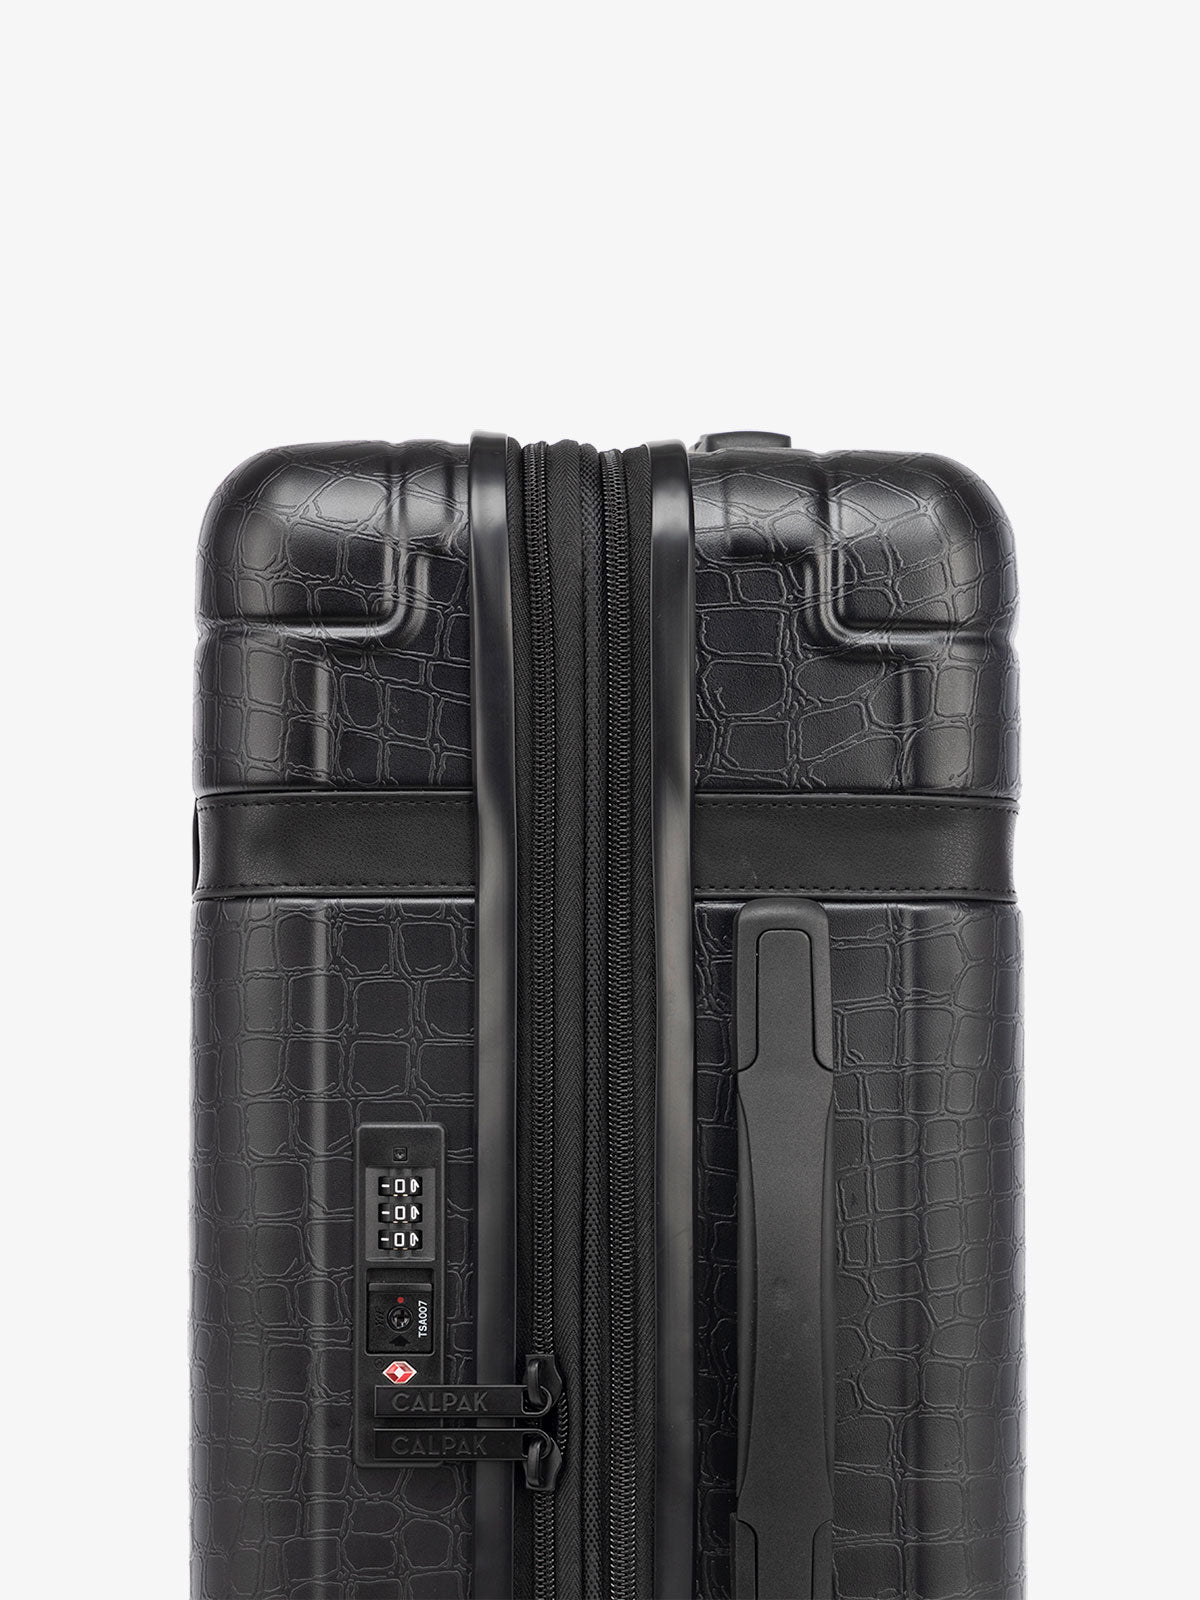 Genuine Alligator Leather 2-piece Spinner Luggage Set